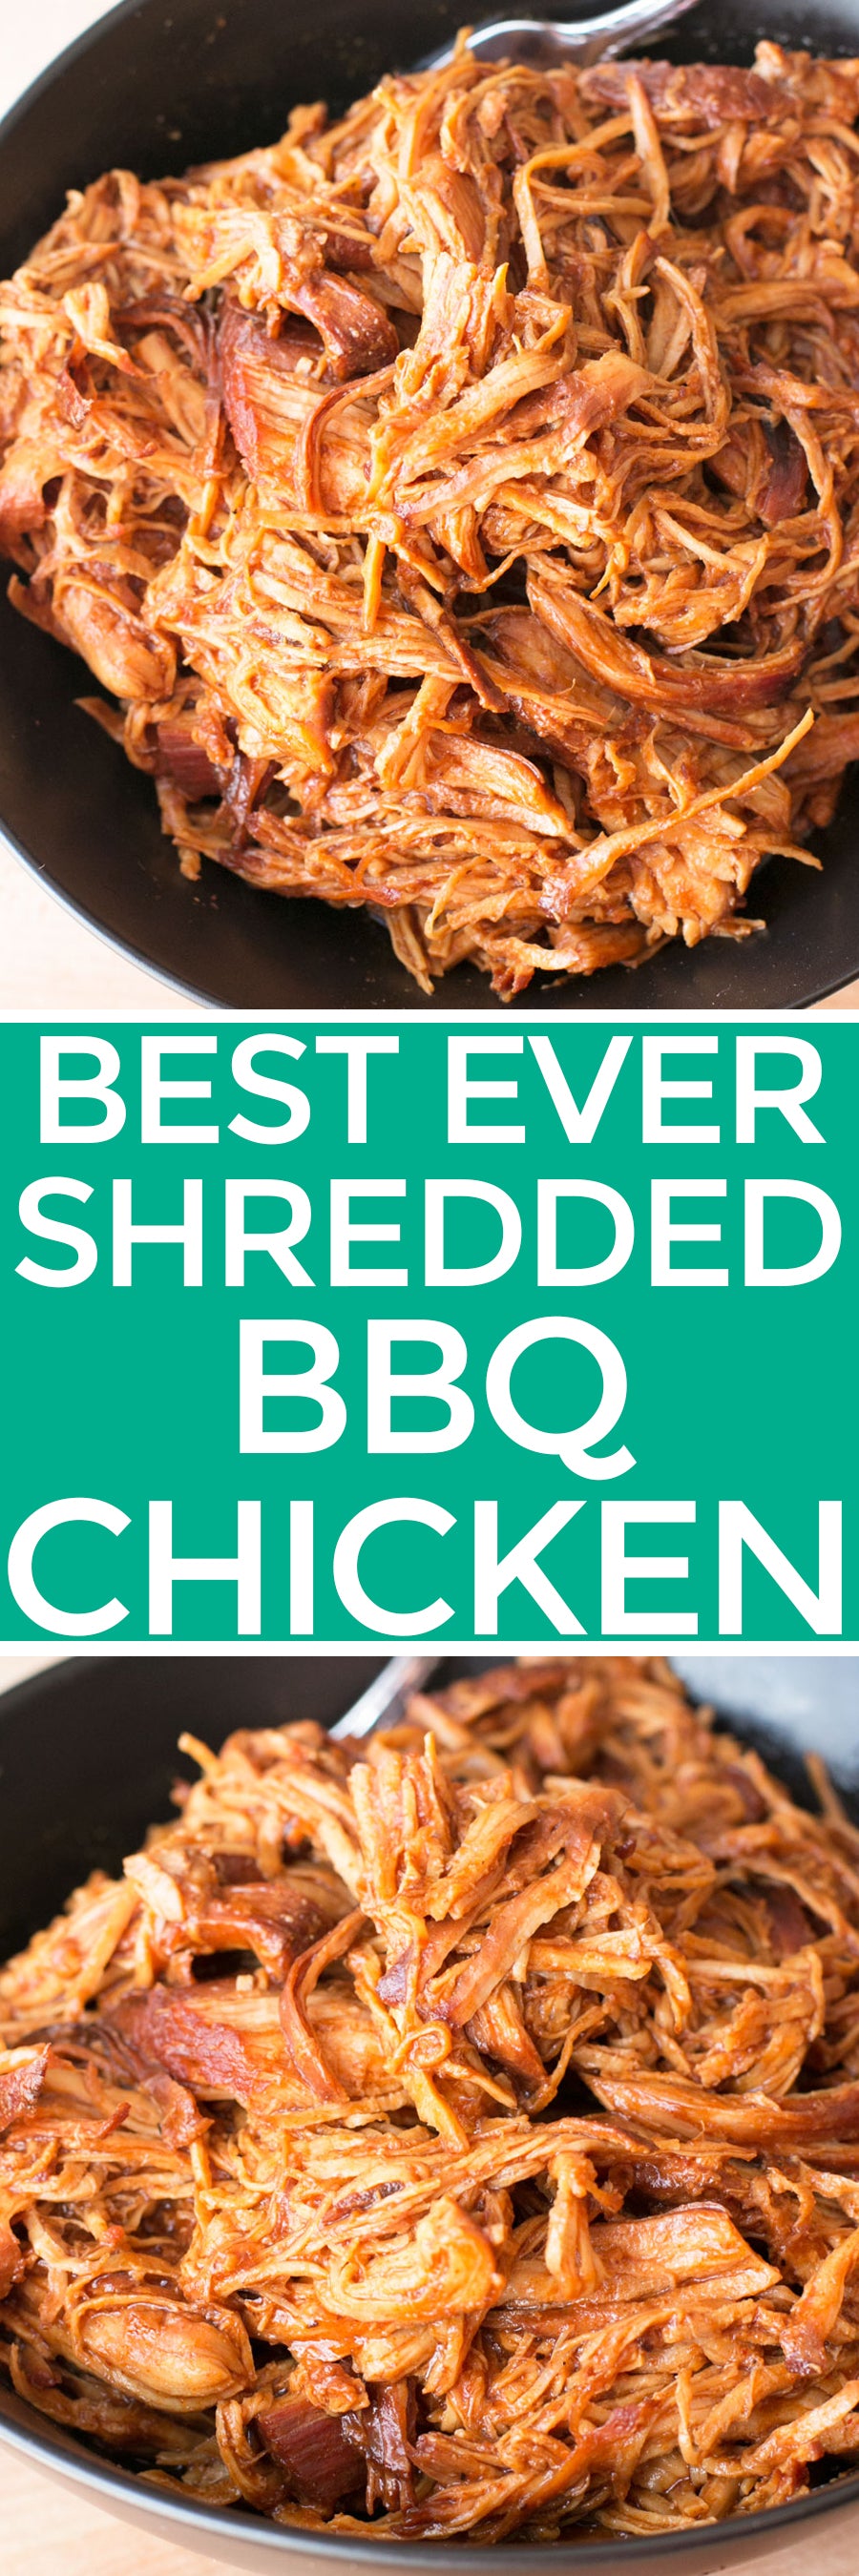 Best Ever Shredded BBQ Chicken | pigofthemonth.com #BBQ #barbecue 